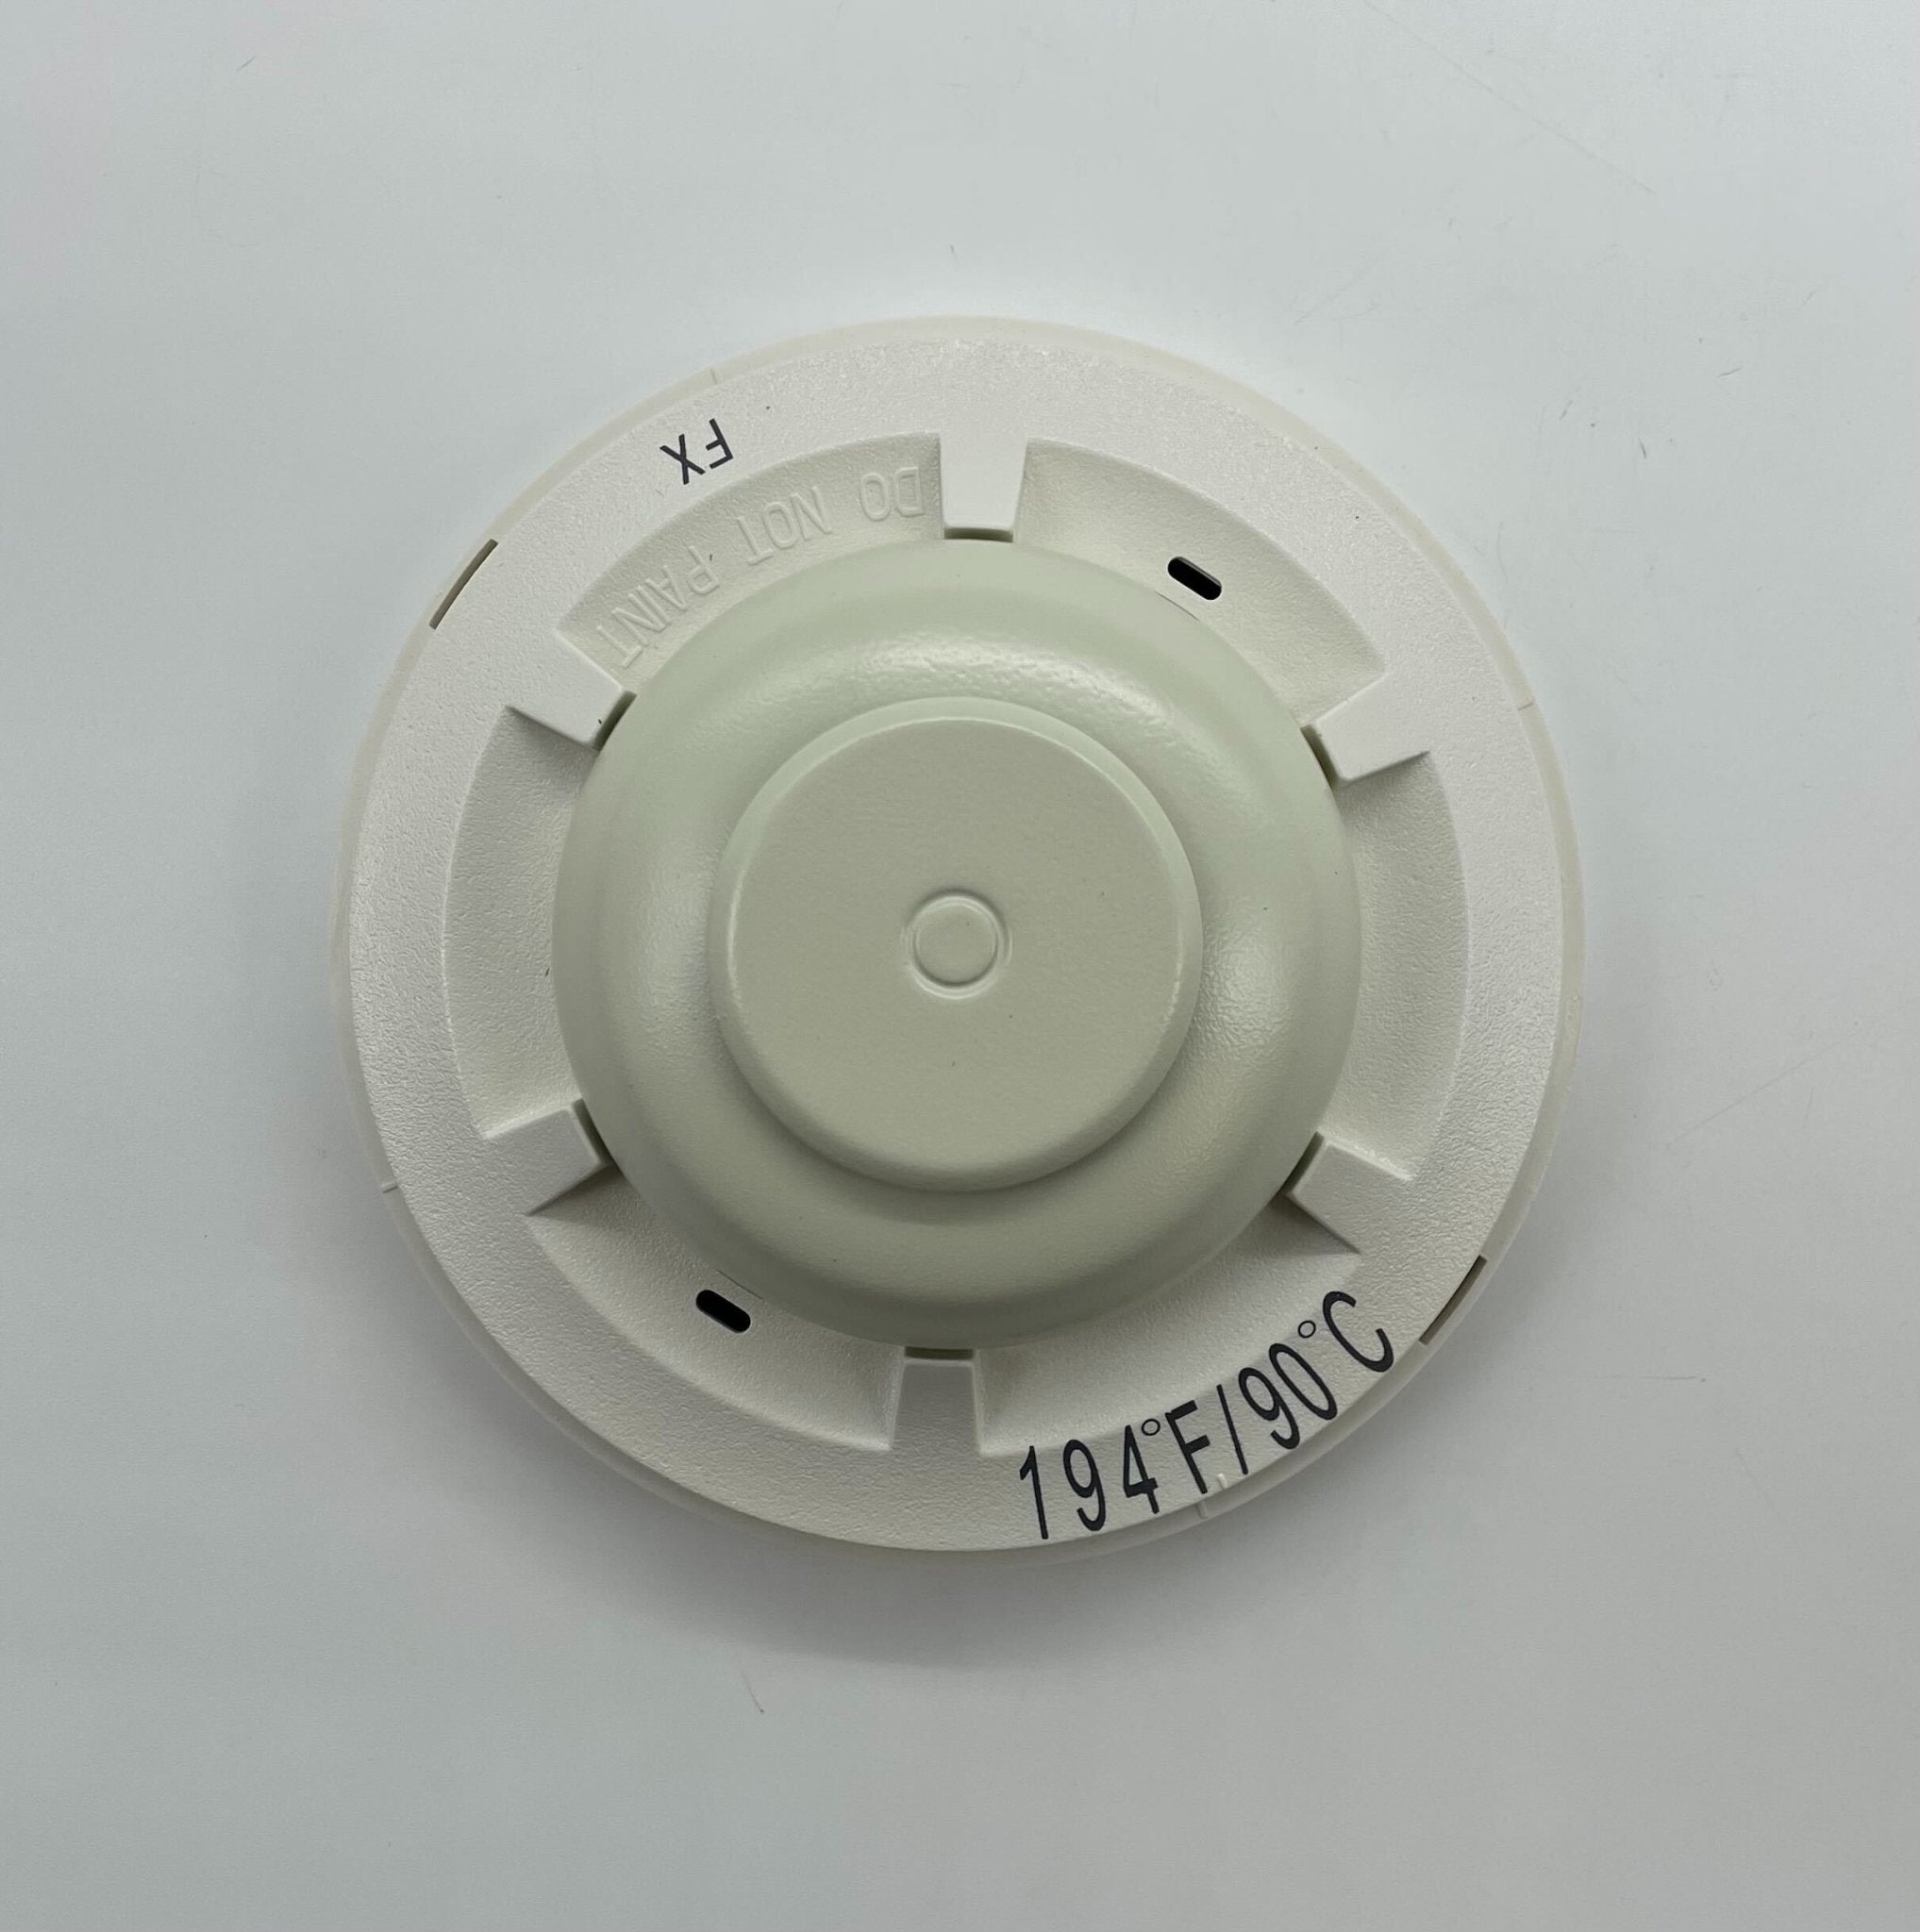 System Sensor 5604 - The Fire Alarm Supplier